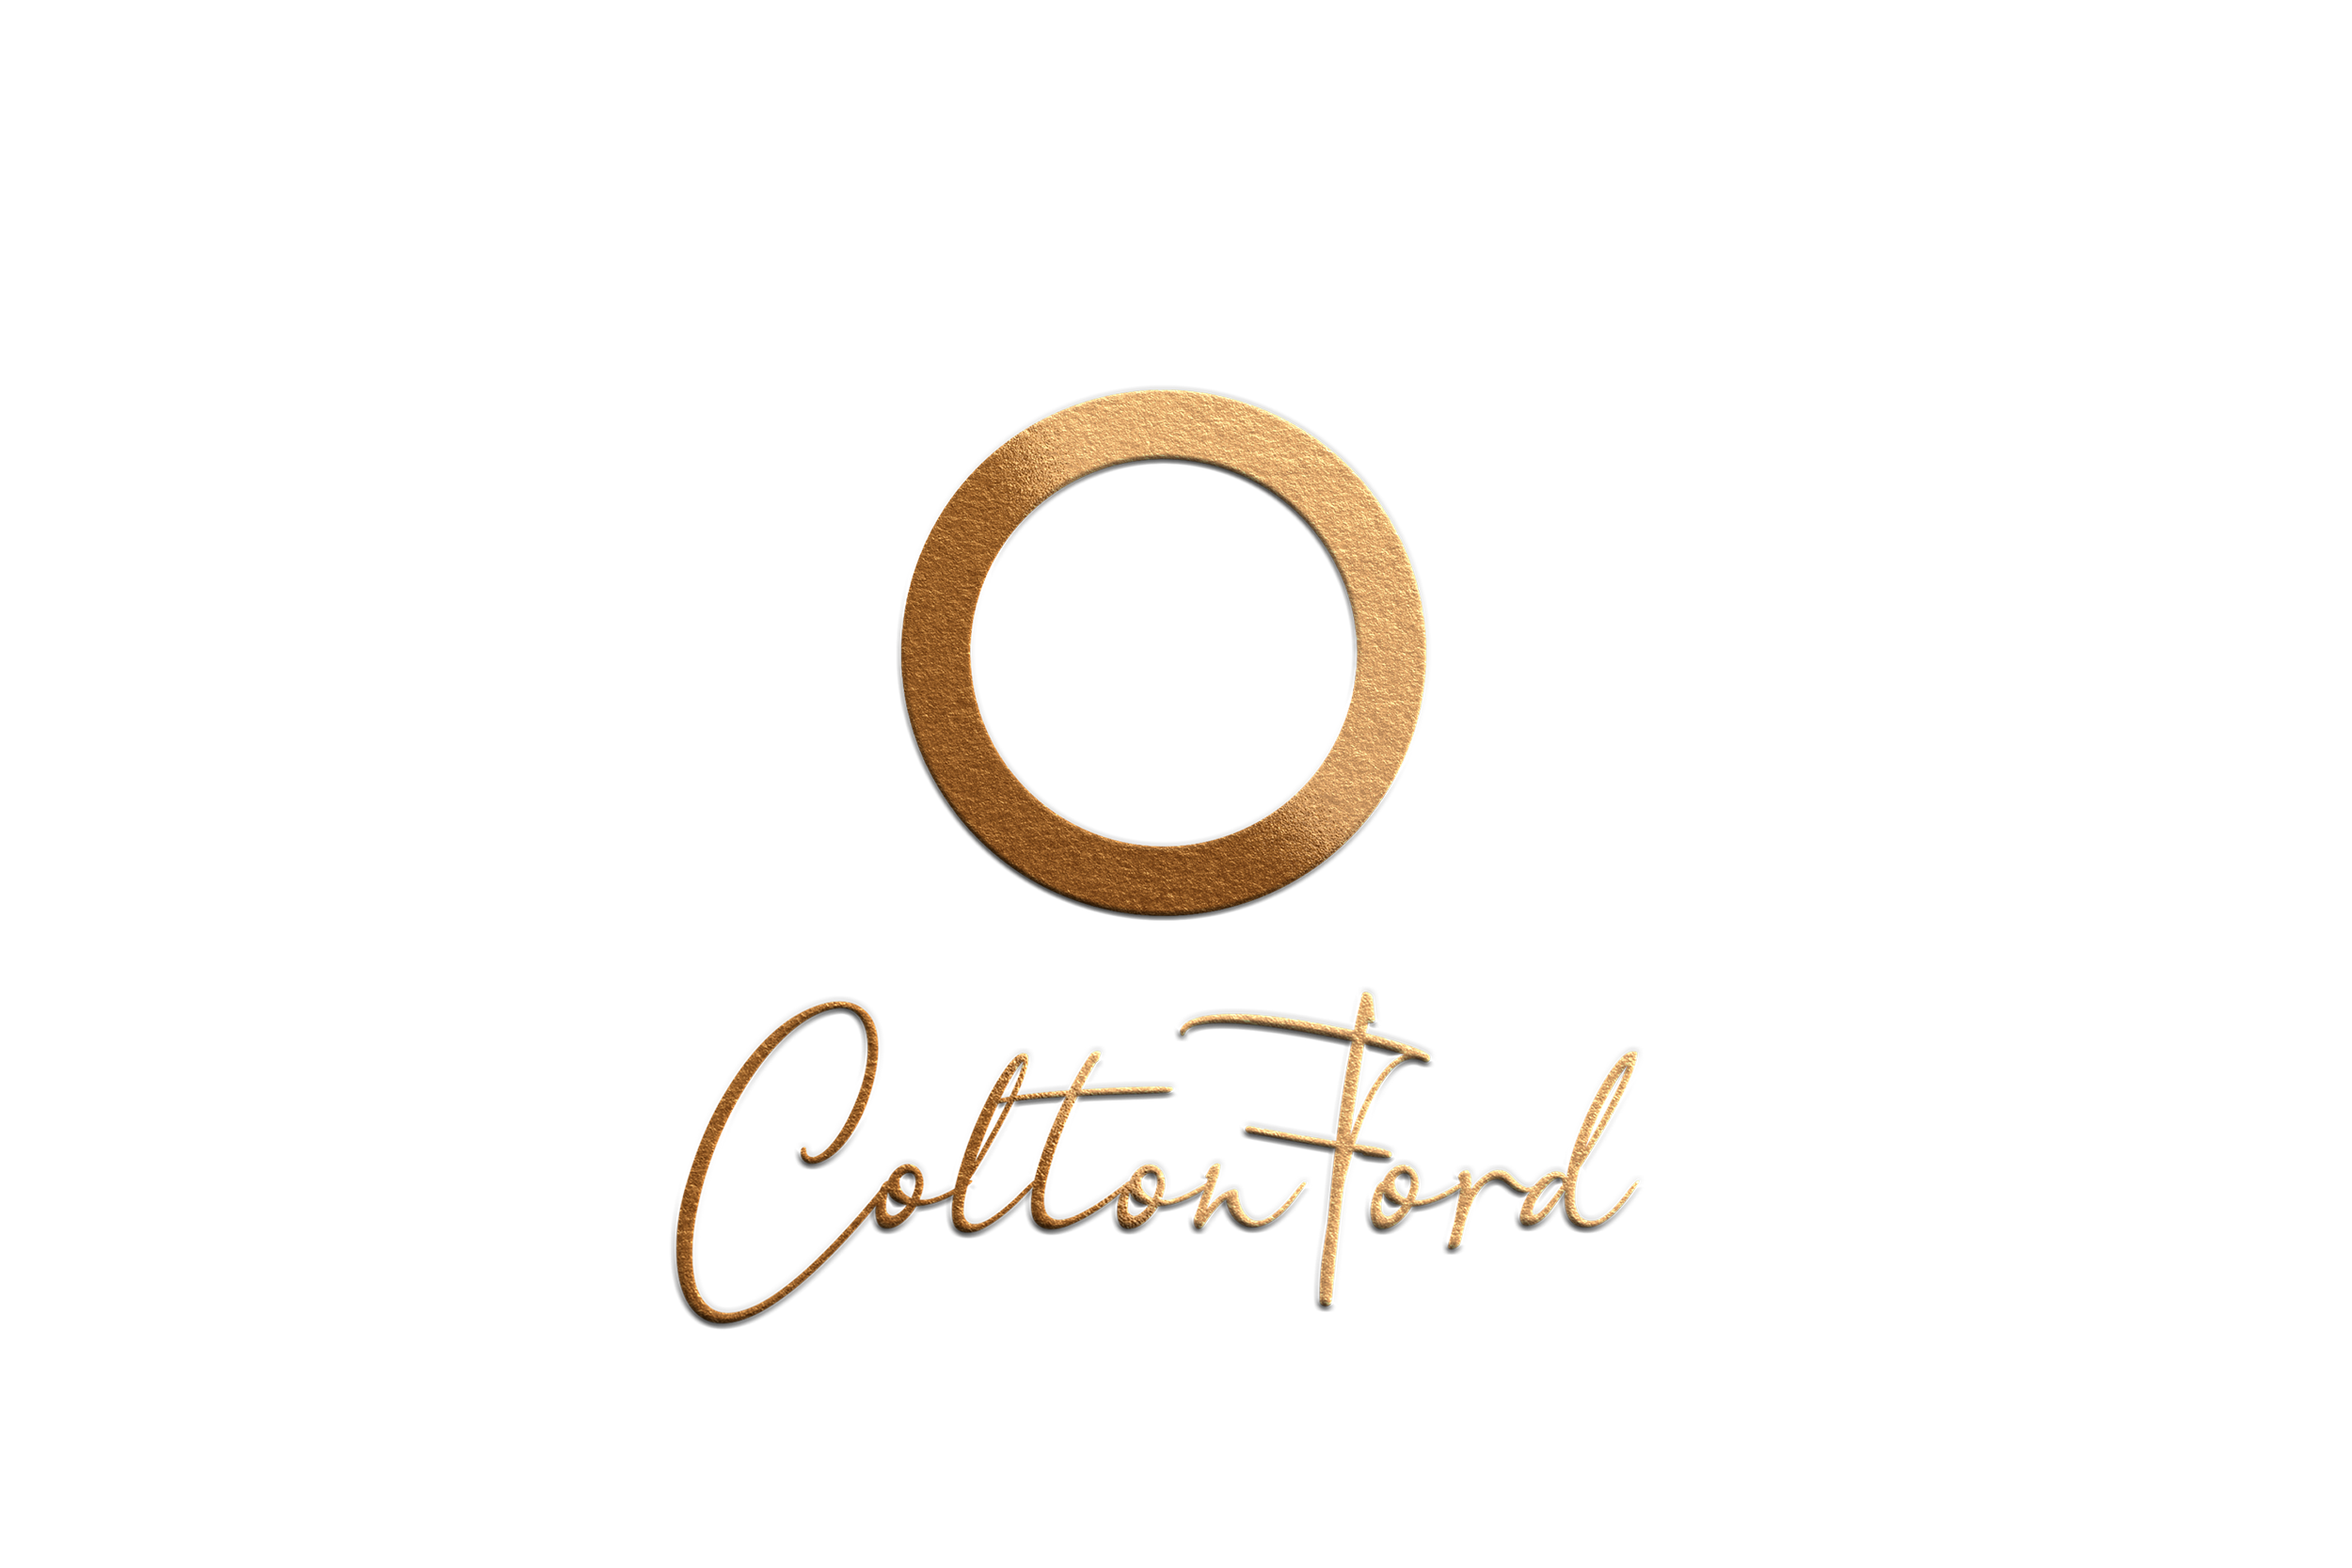 https://coltonford.com/wp-content/uploads/2021/12/Colton-Ford-logo.png